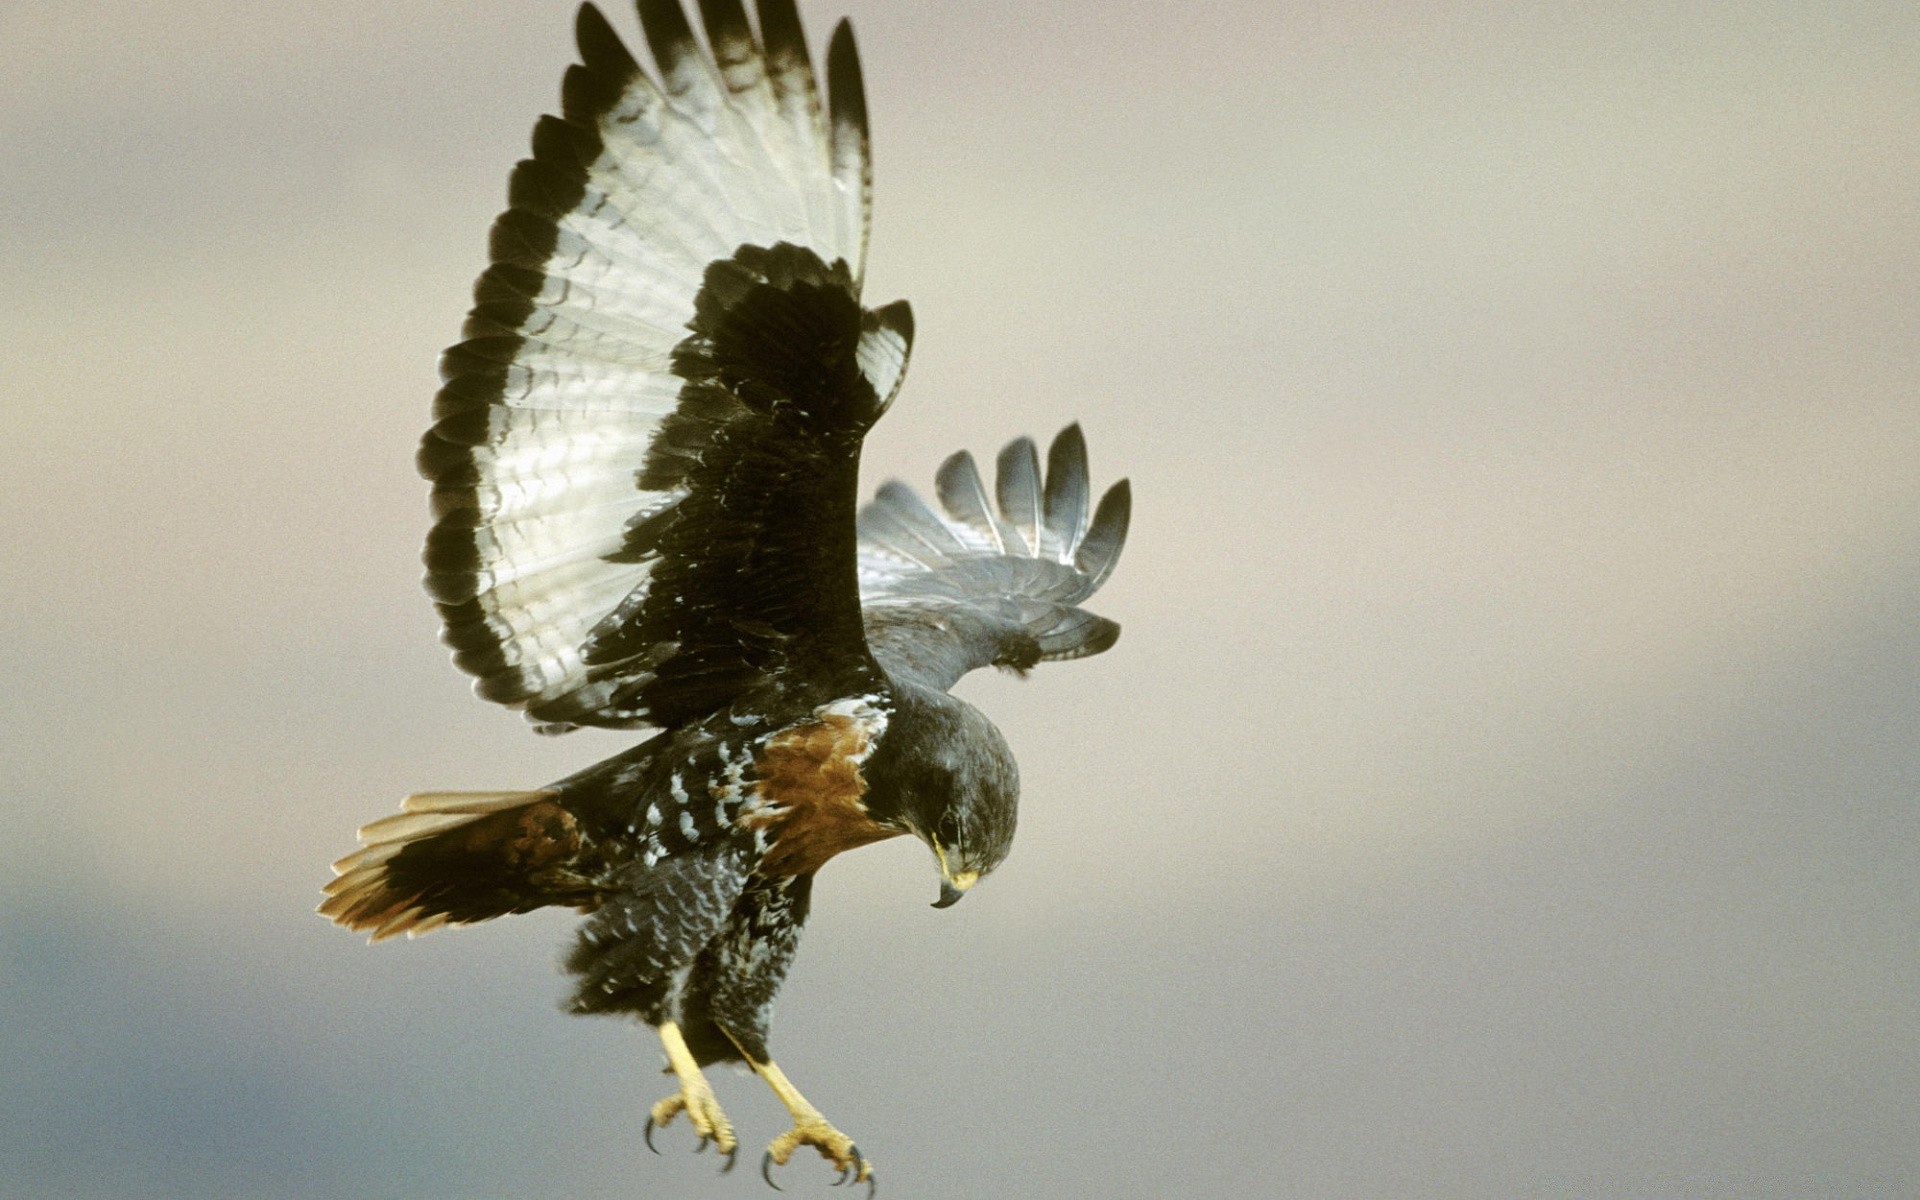 birds bird raptor wildlife eagle nature feather hawk animal outdoors prey flight falcon